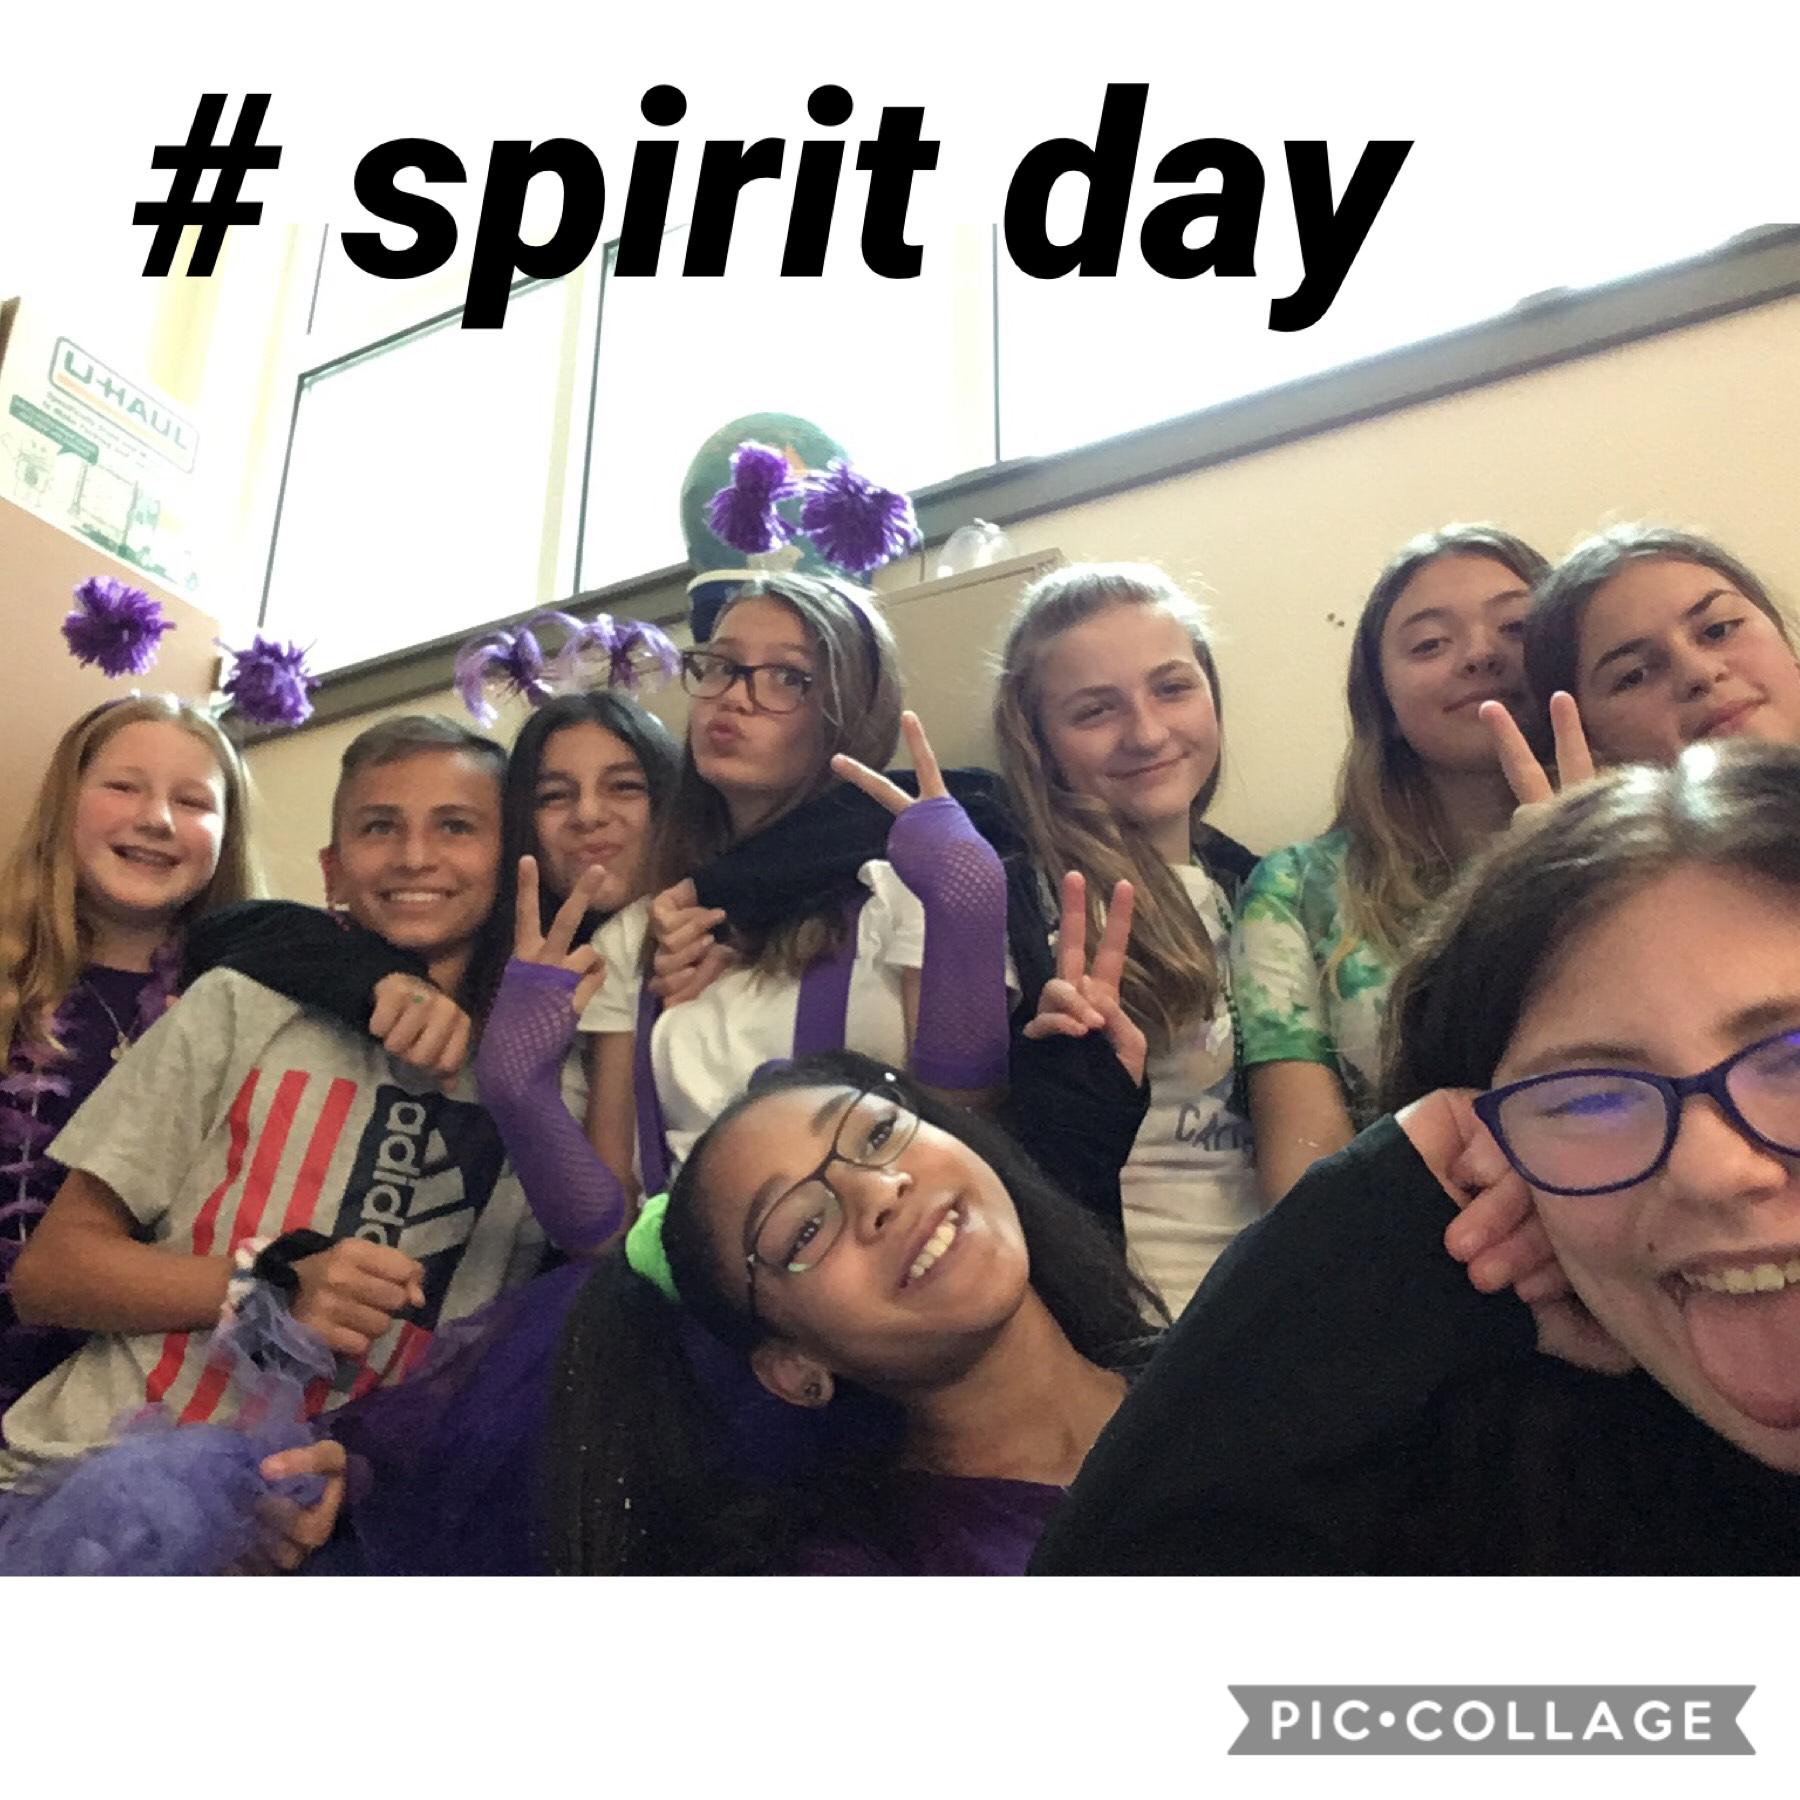 # spirit day at Thomas Jefferson middle school in Vancouver Washington 